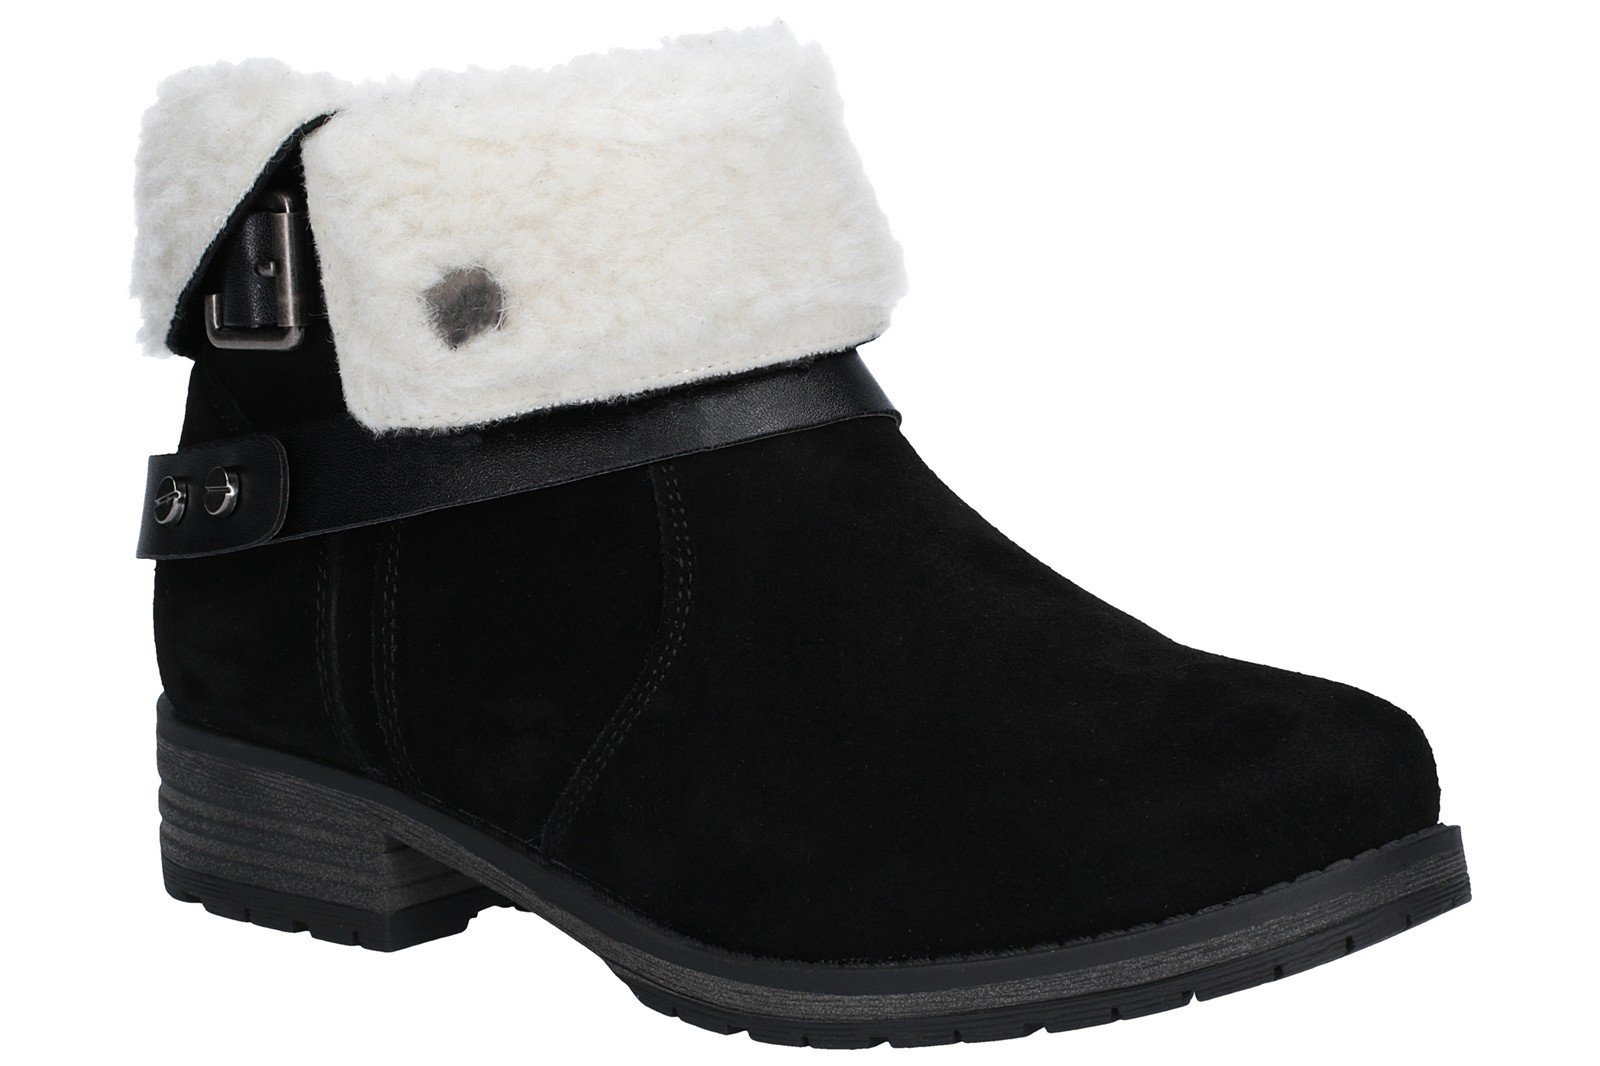 Fleet & Foster Women's Soda Ankle Boot Black 27145-45603 - Black 3